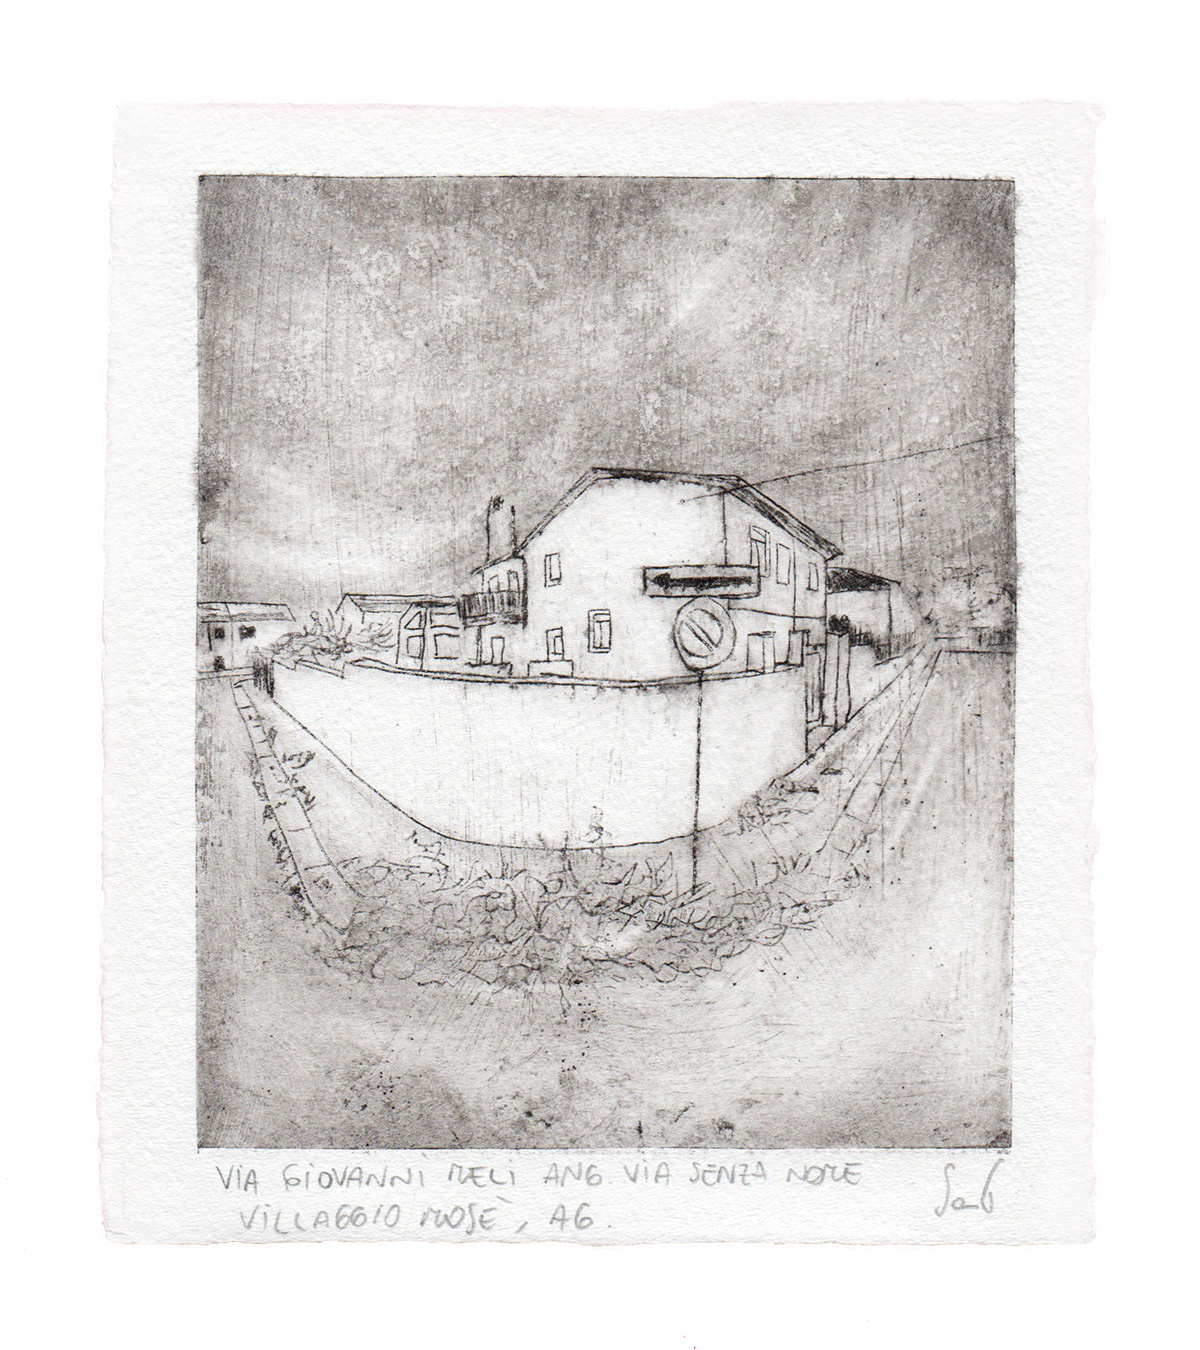 incisione etching printmaking prints Drawing  artist nostalgia documenting space intaglio memories